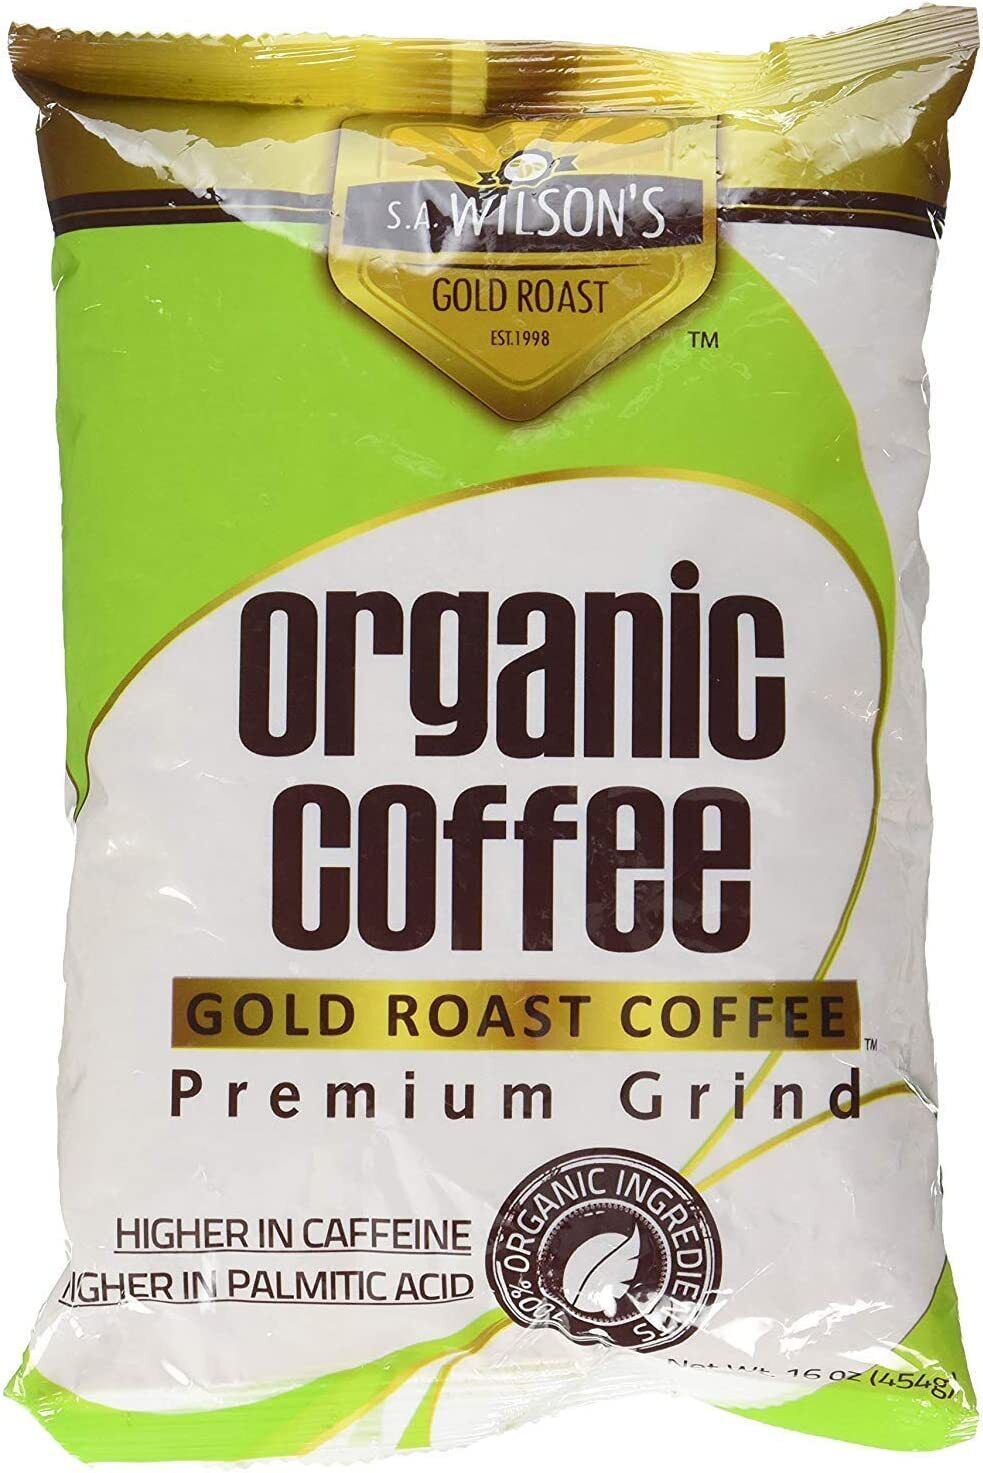 S.A. Wilson's Gold Roast Enema Coffee, Organic, Premium Ground, One Pound Bag